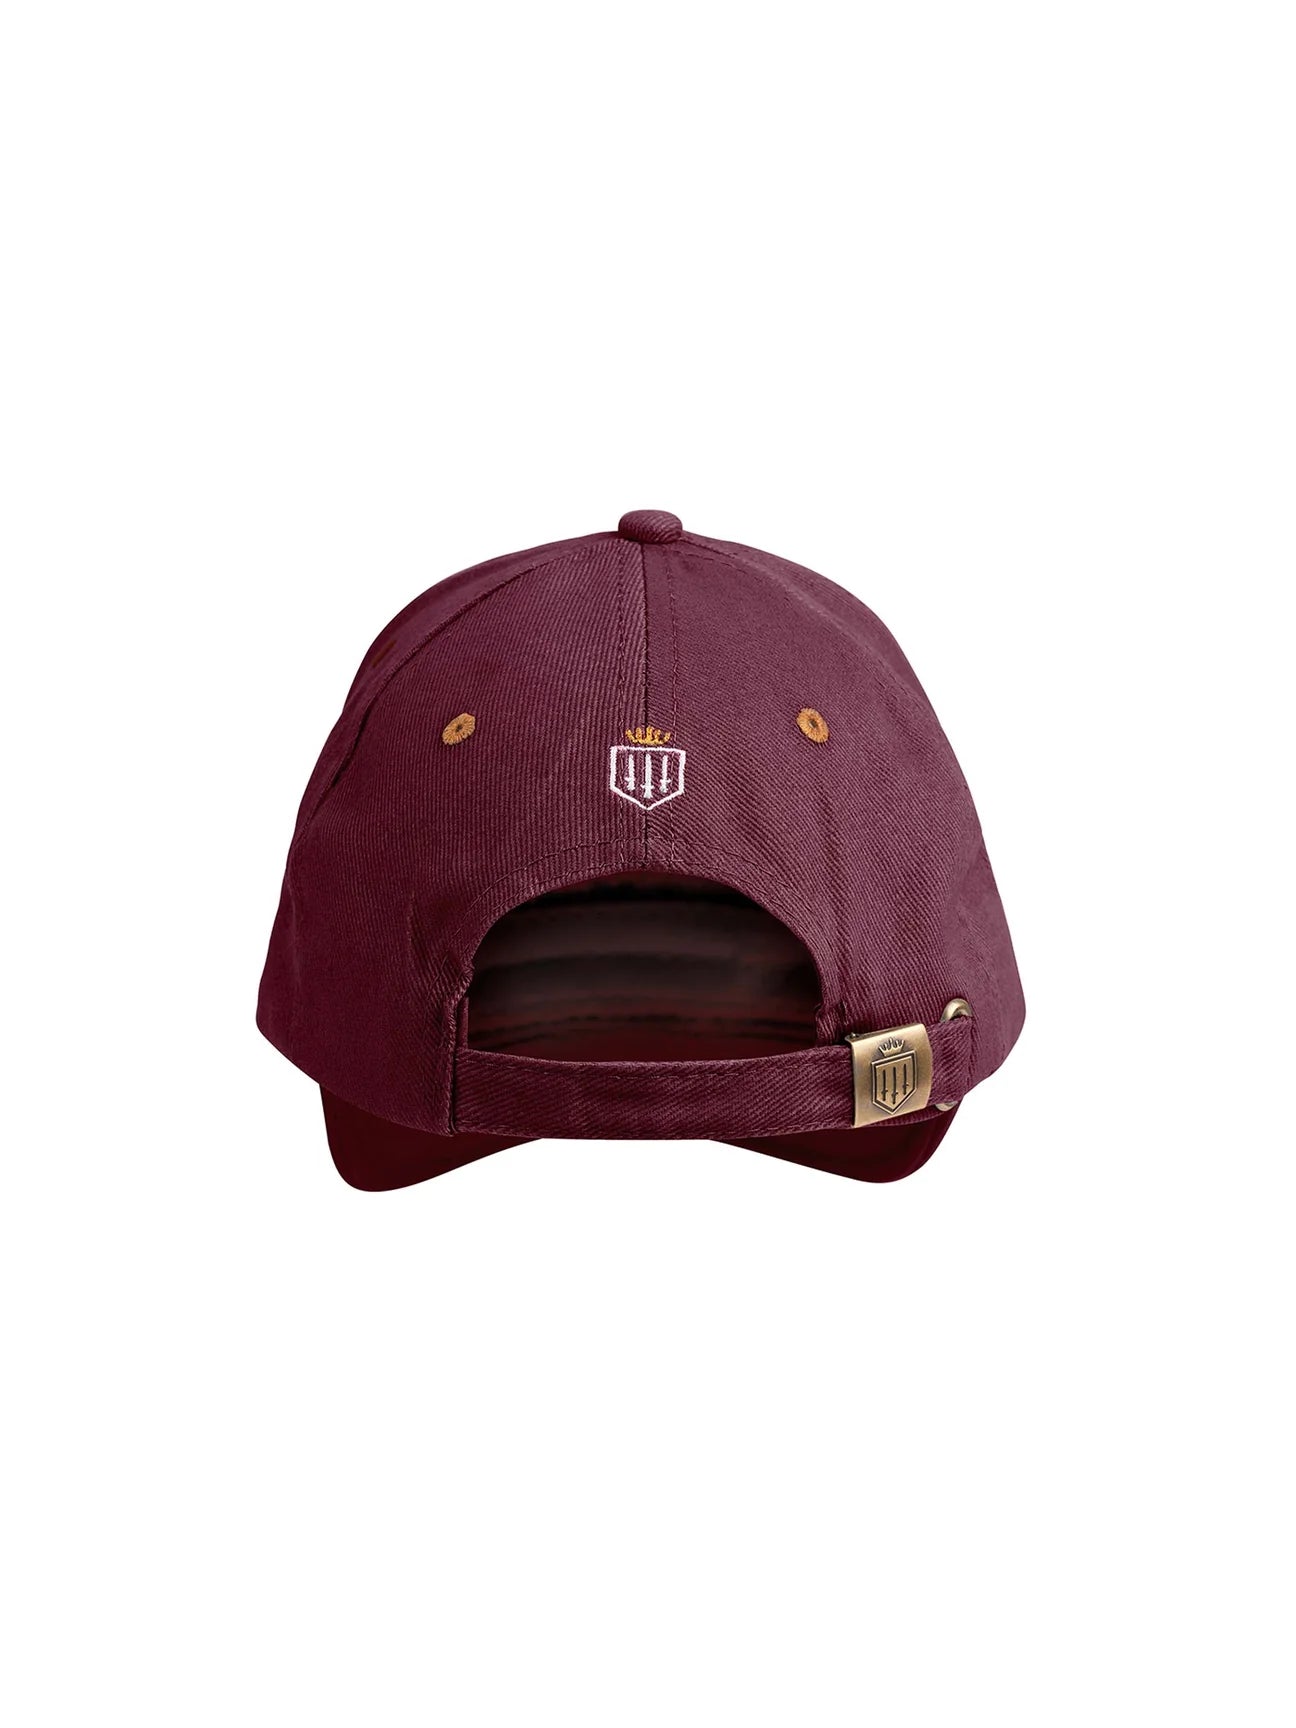 The Signature Hat
Baseball Cap - Burgundy